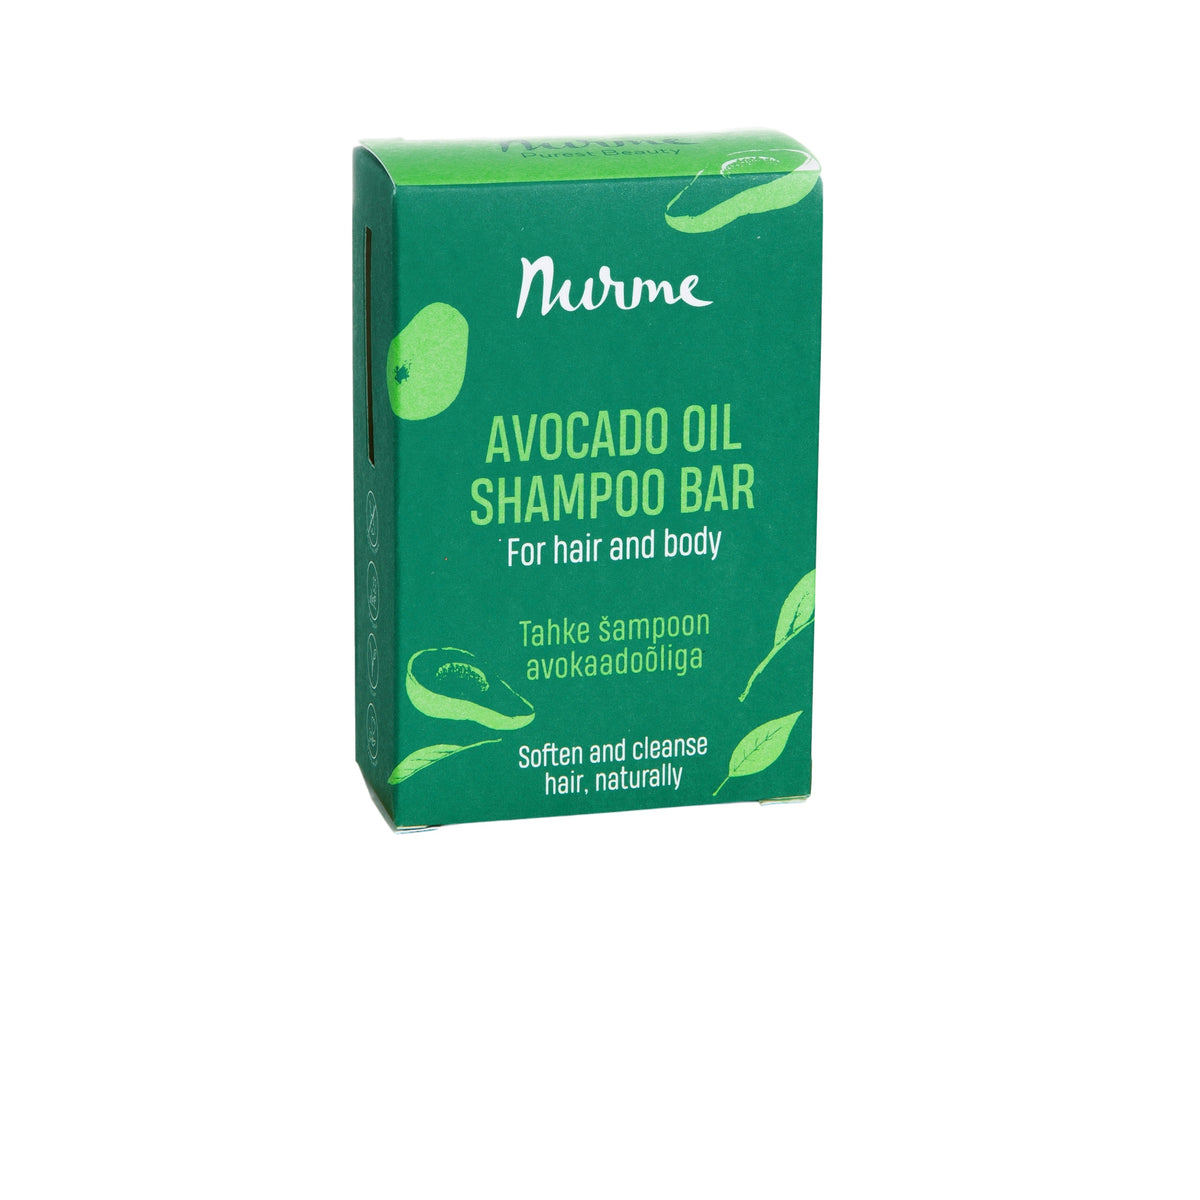 Nurme Avocado Oil Shampoo Bar - Avokadoöljy Palashampoo 100 g